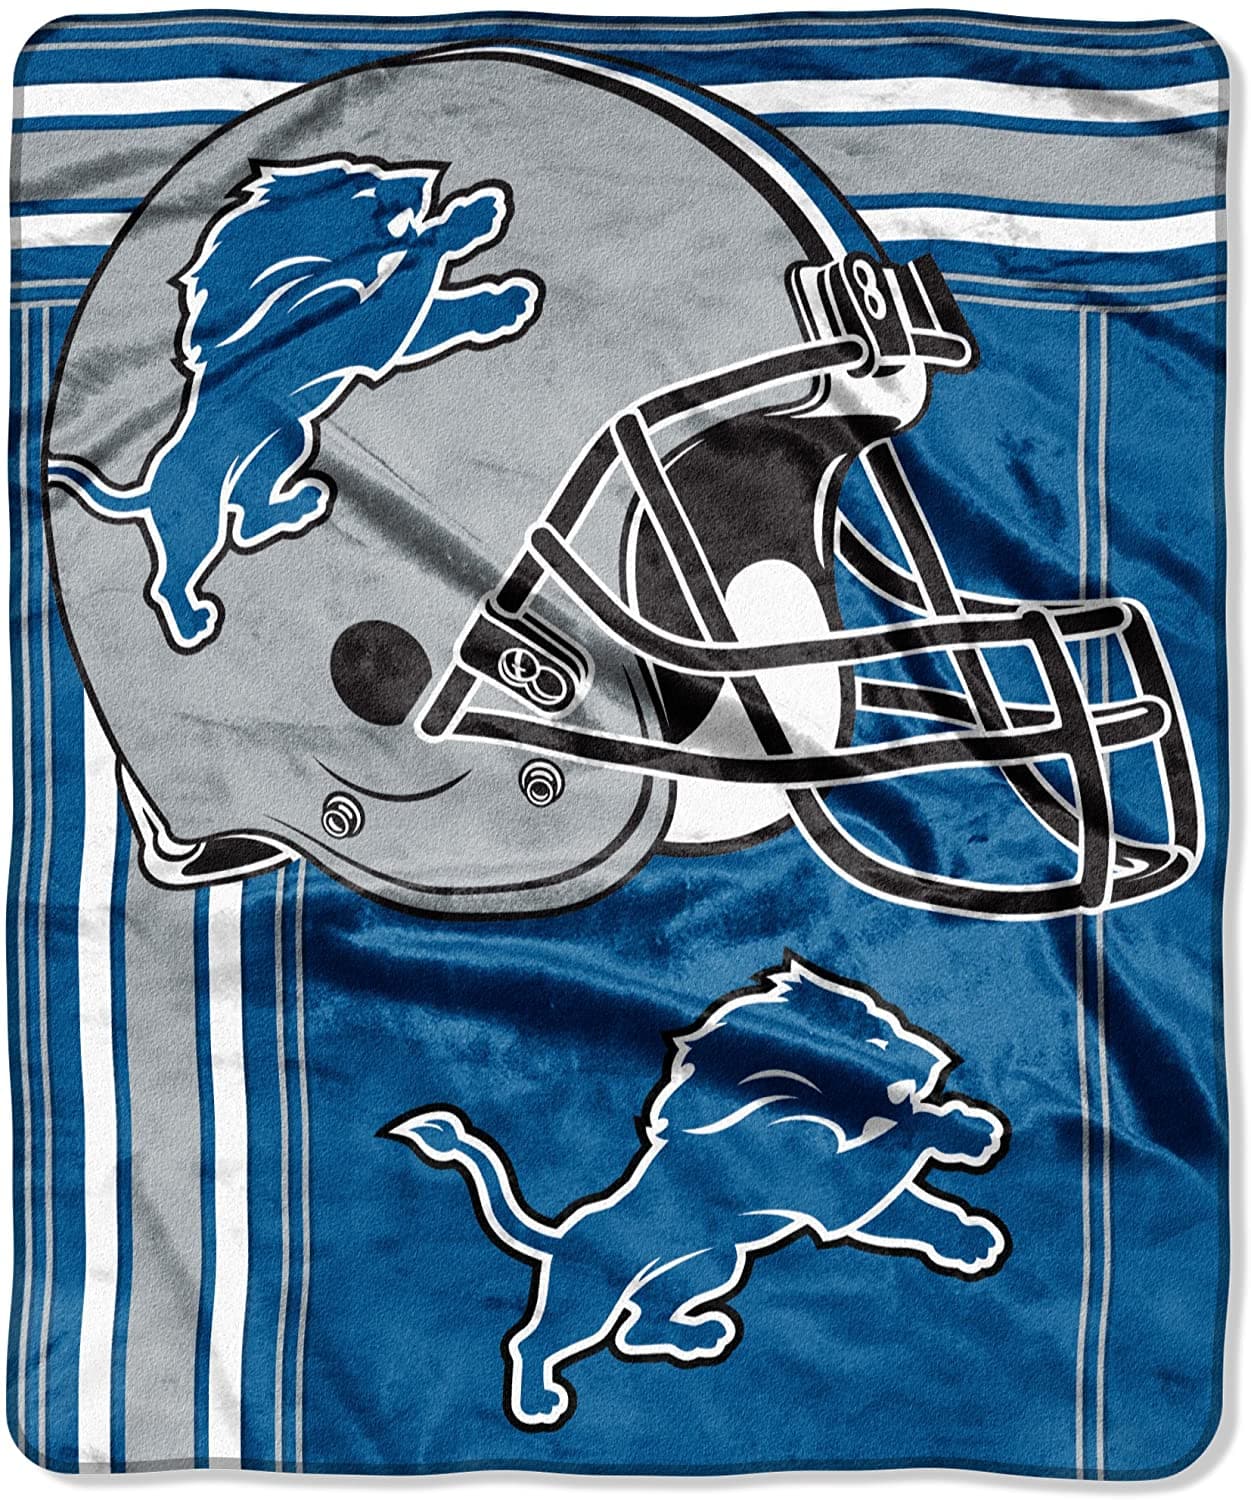 Officially Licensed Nfl Throw Detroit Lions Fleece Blanket